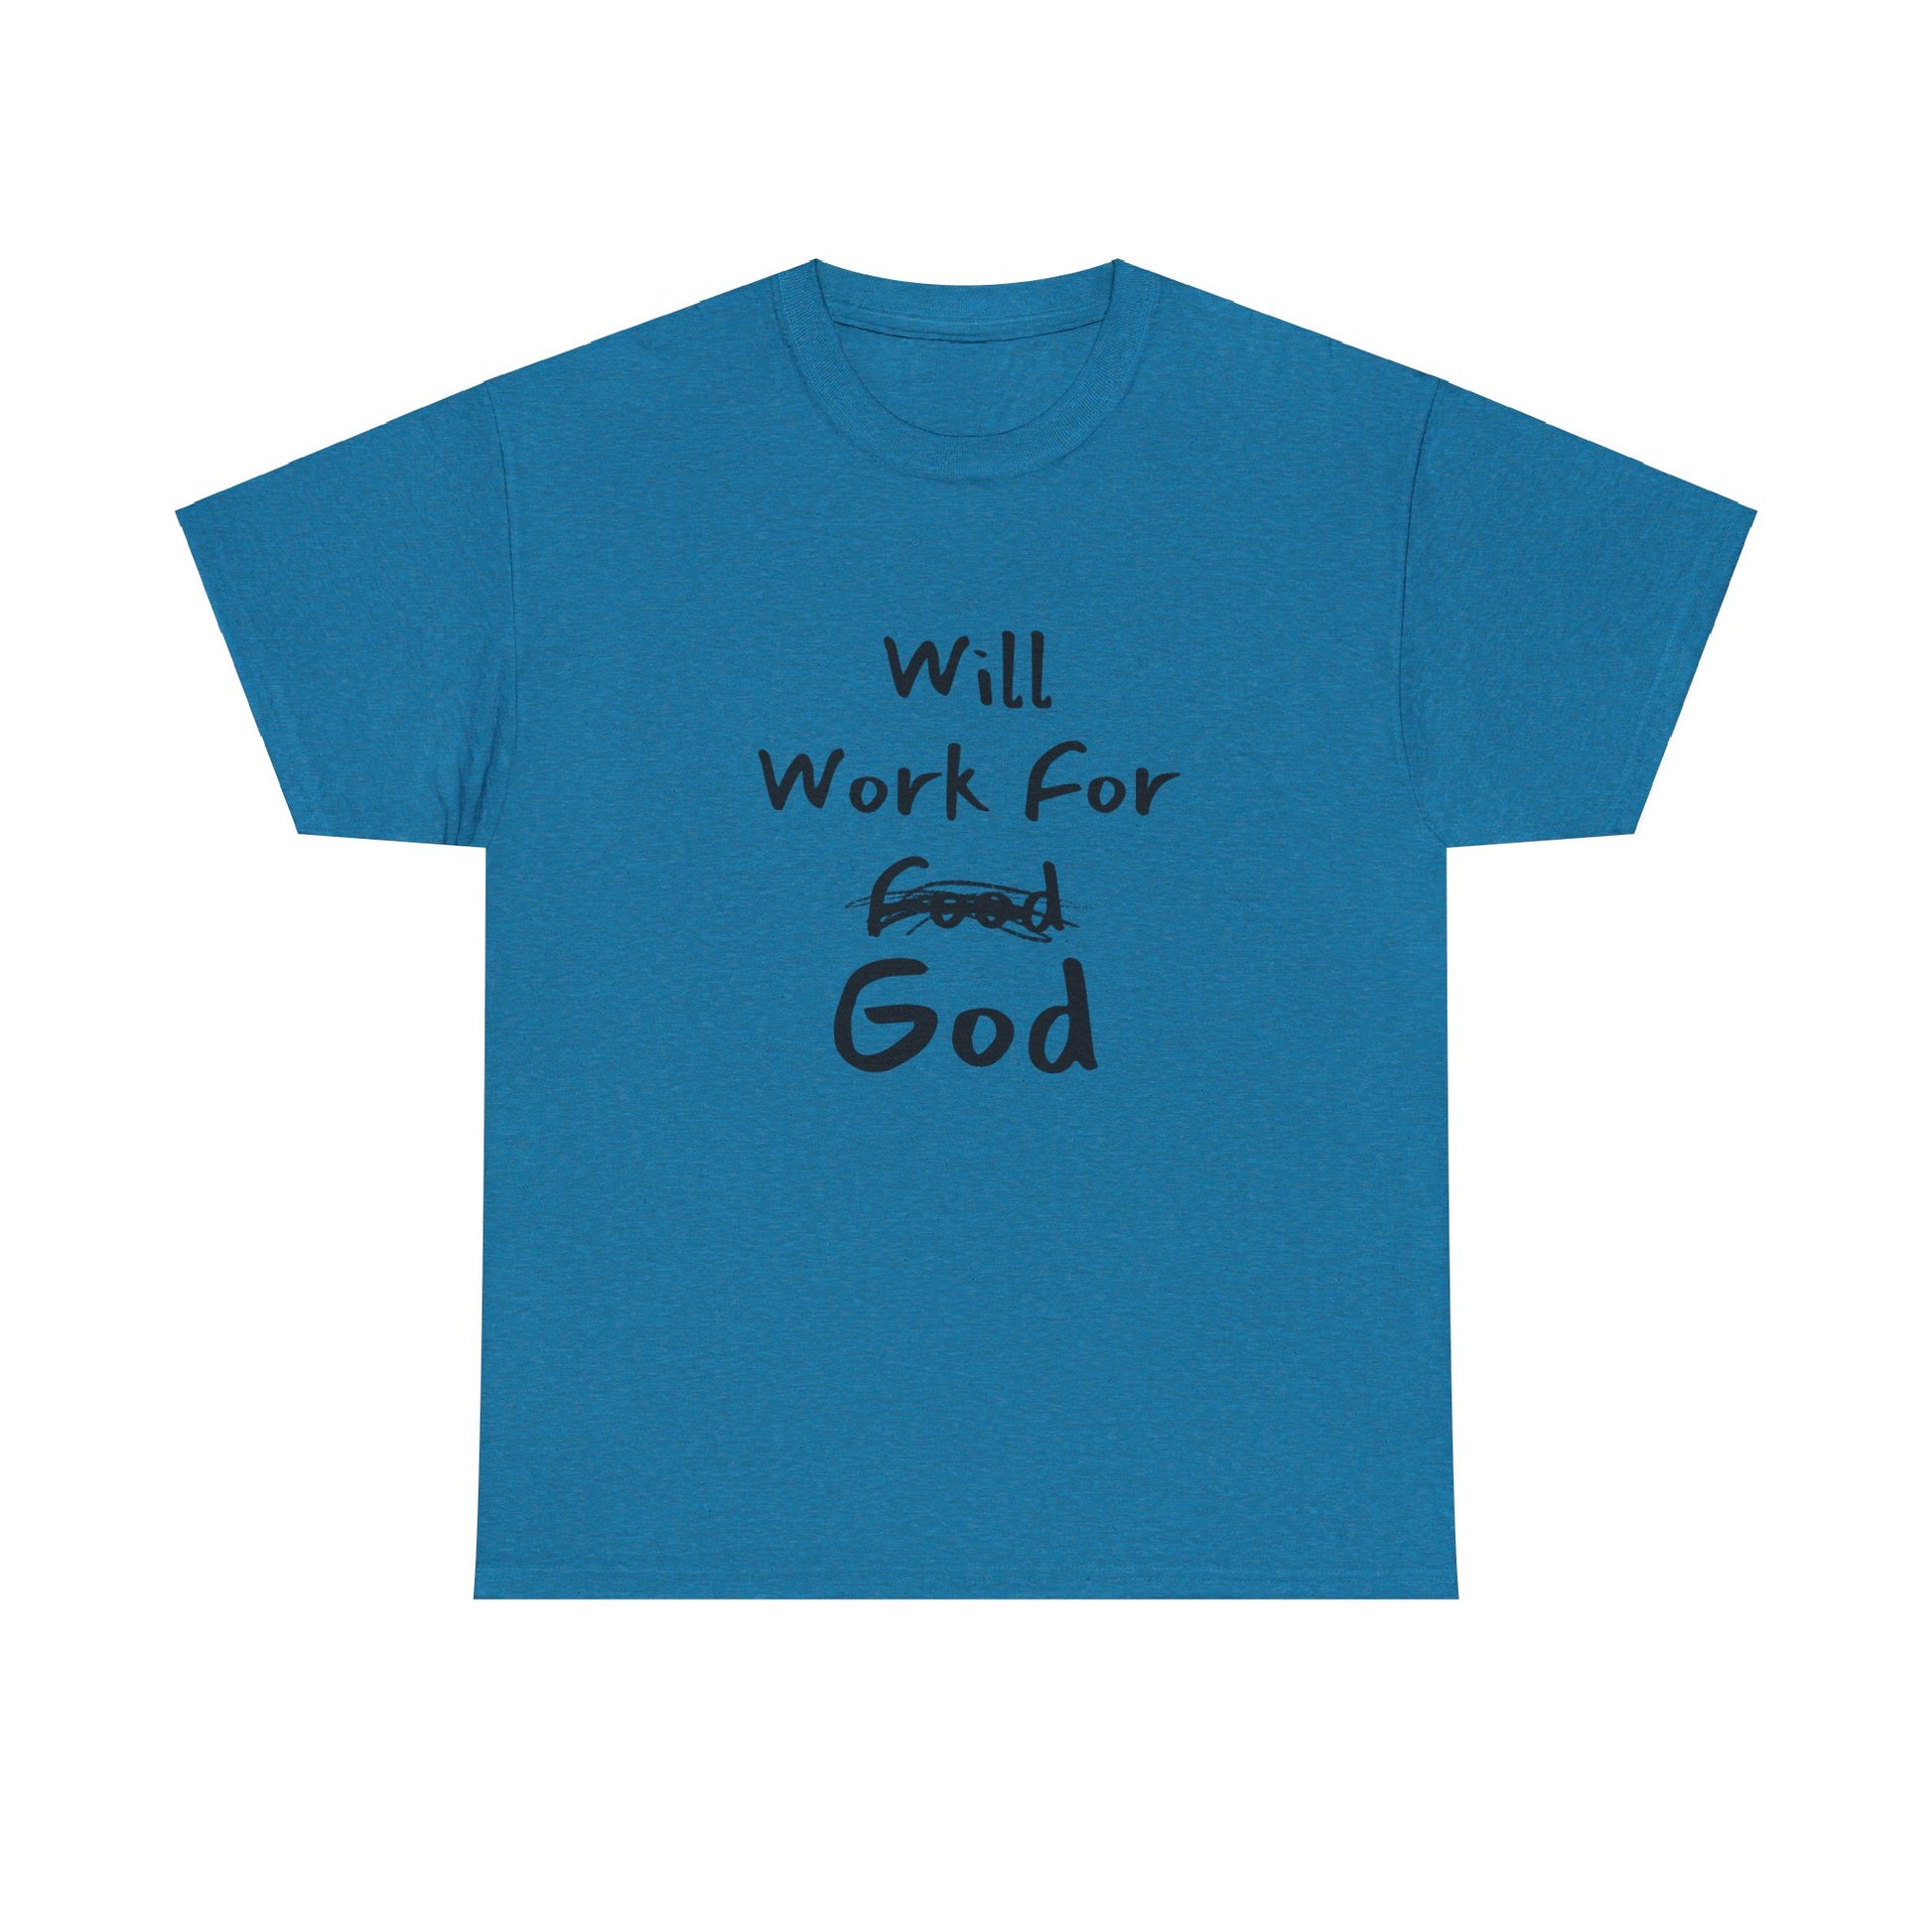 "Premium printed 'Will Work For God' faith-based T-shirt."